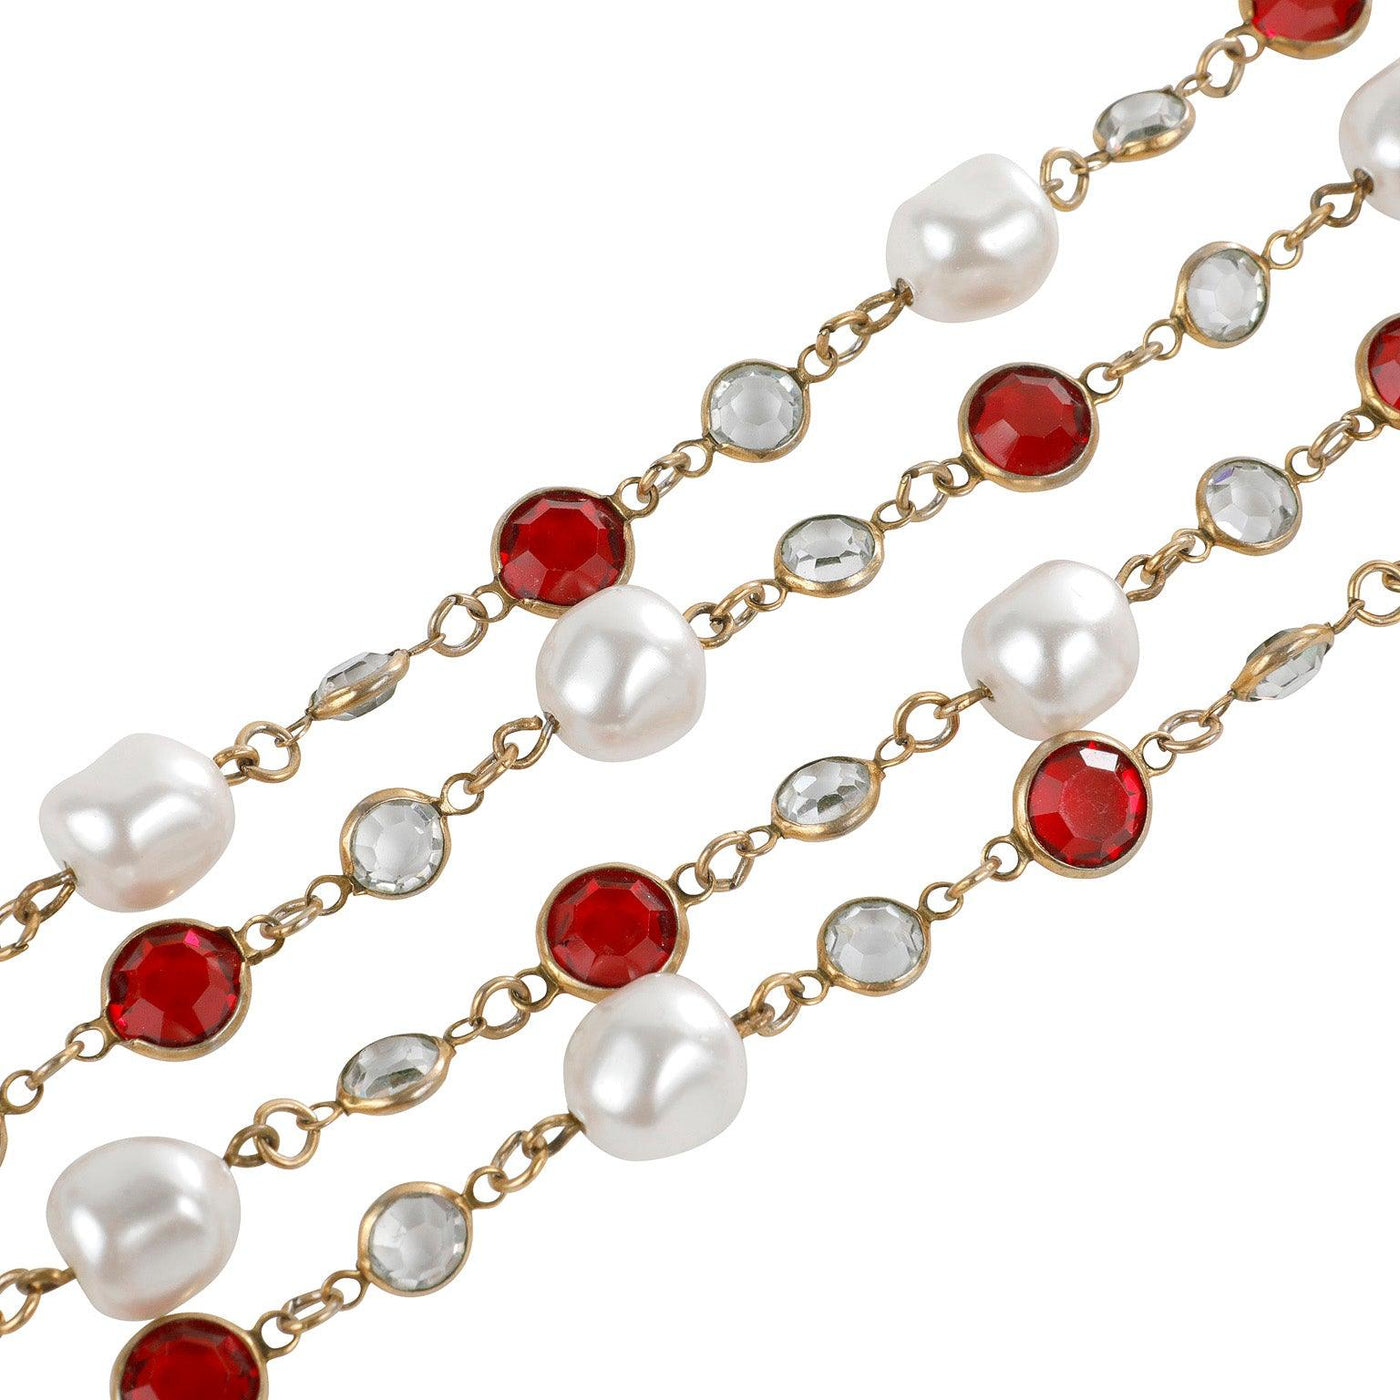 Chanel Pearl & Crystal Sautoir Necklace